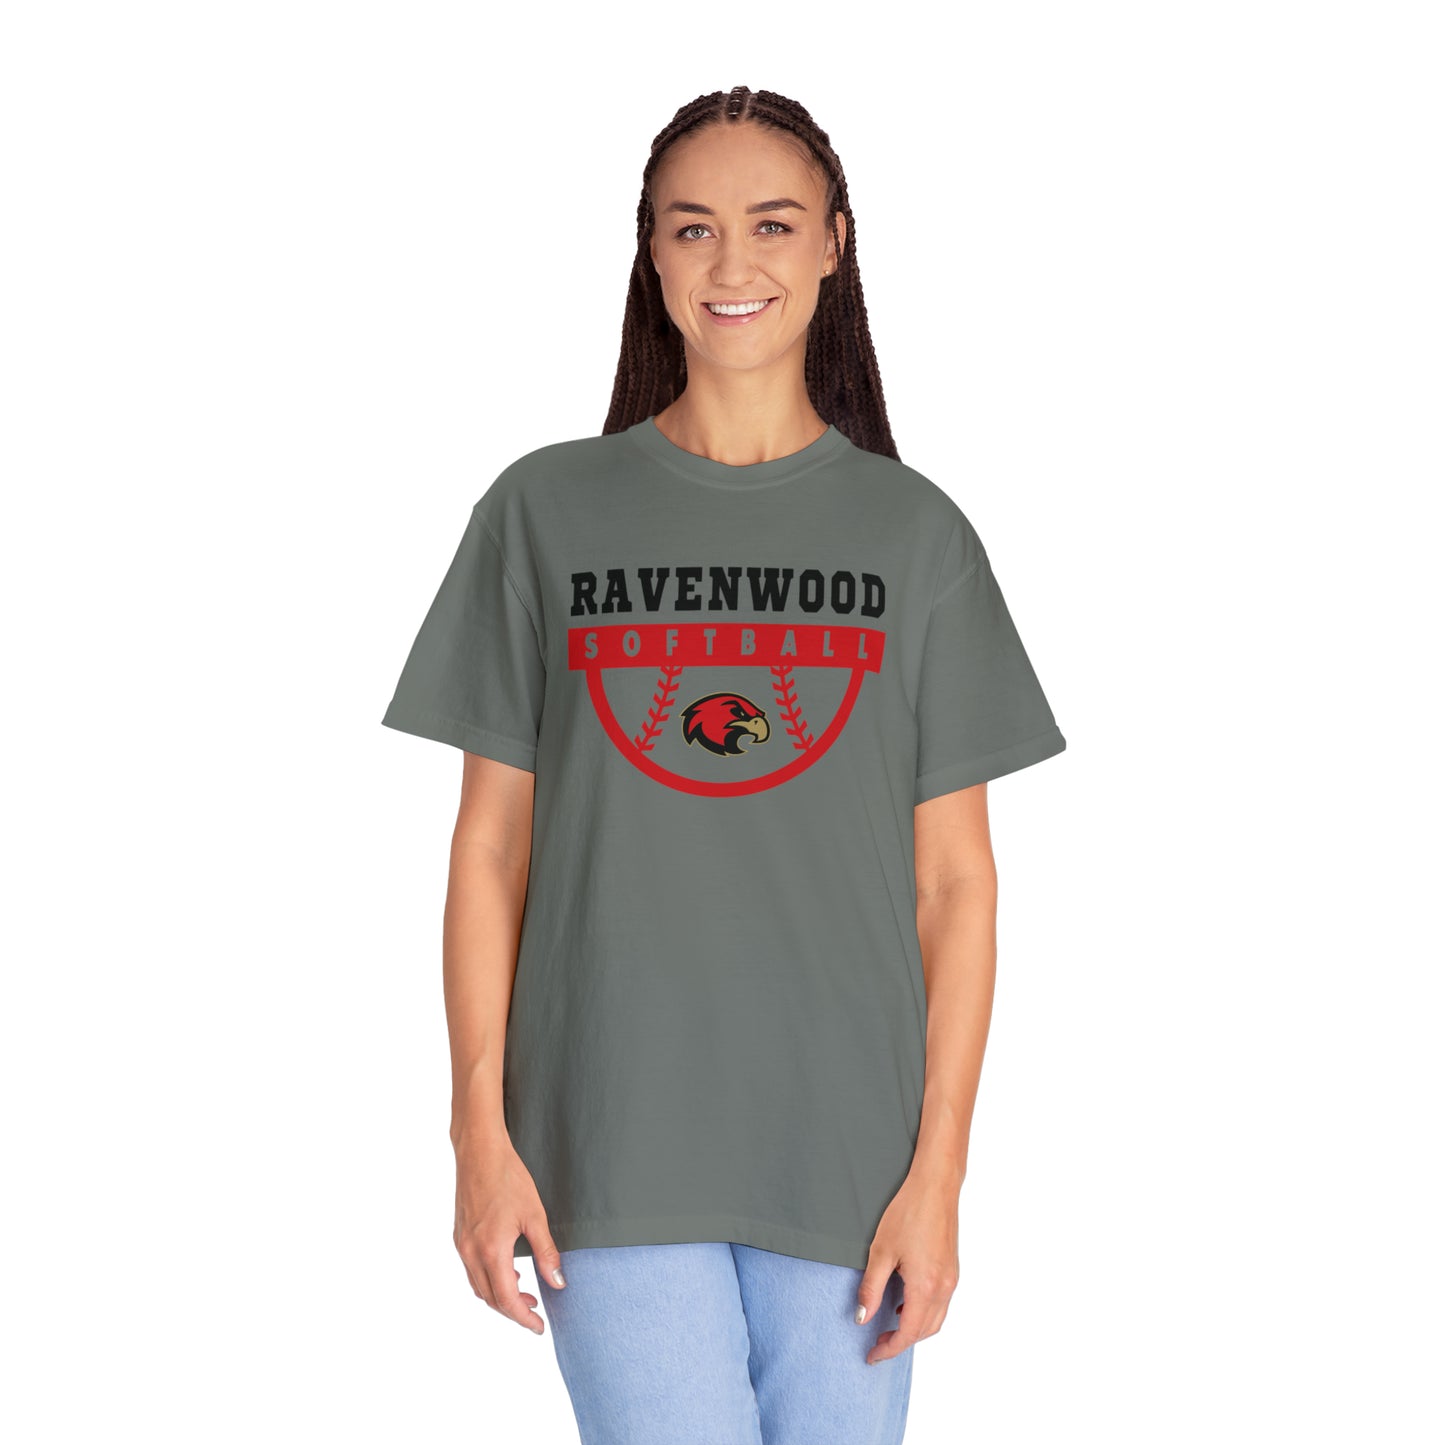 Ravenwood 6 Unisex Comfort Colors Shirt